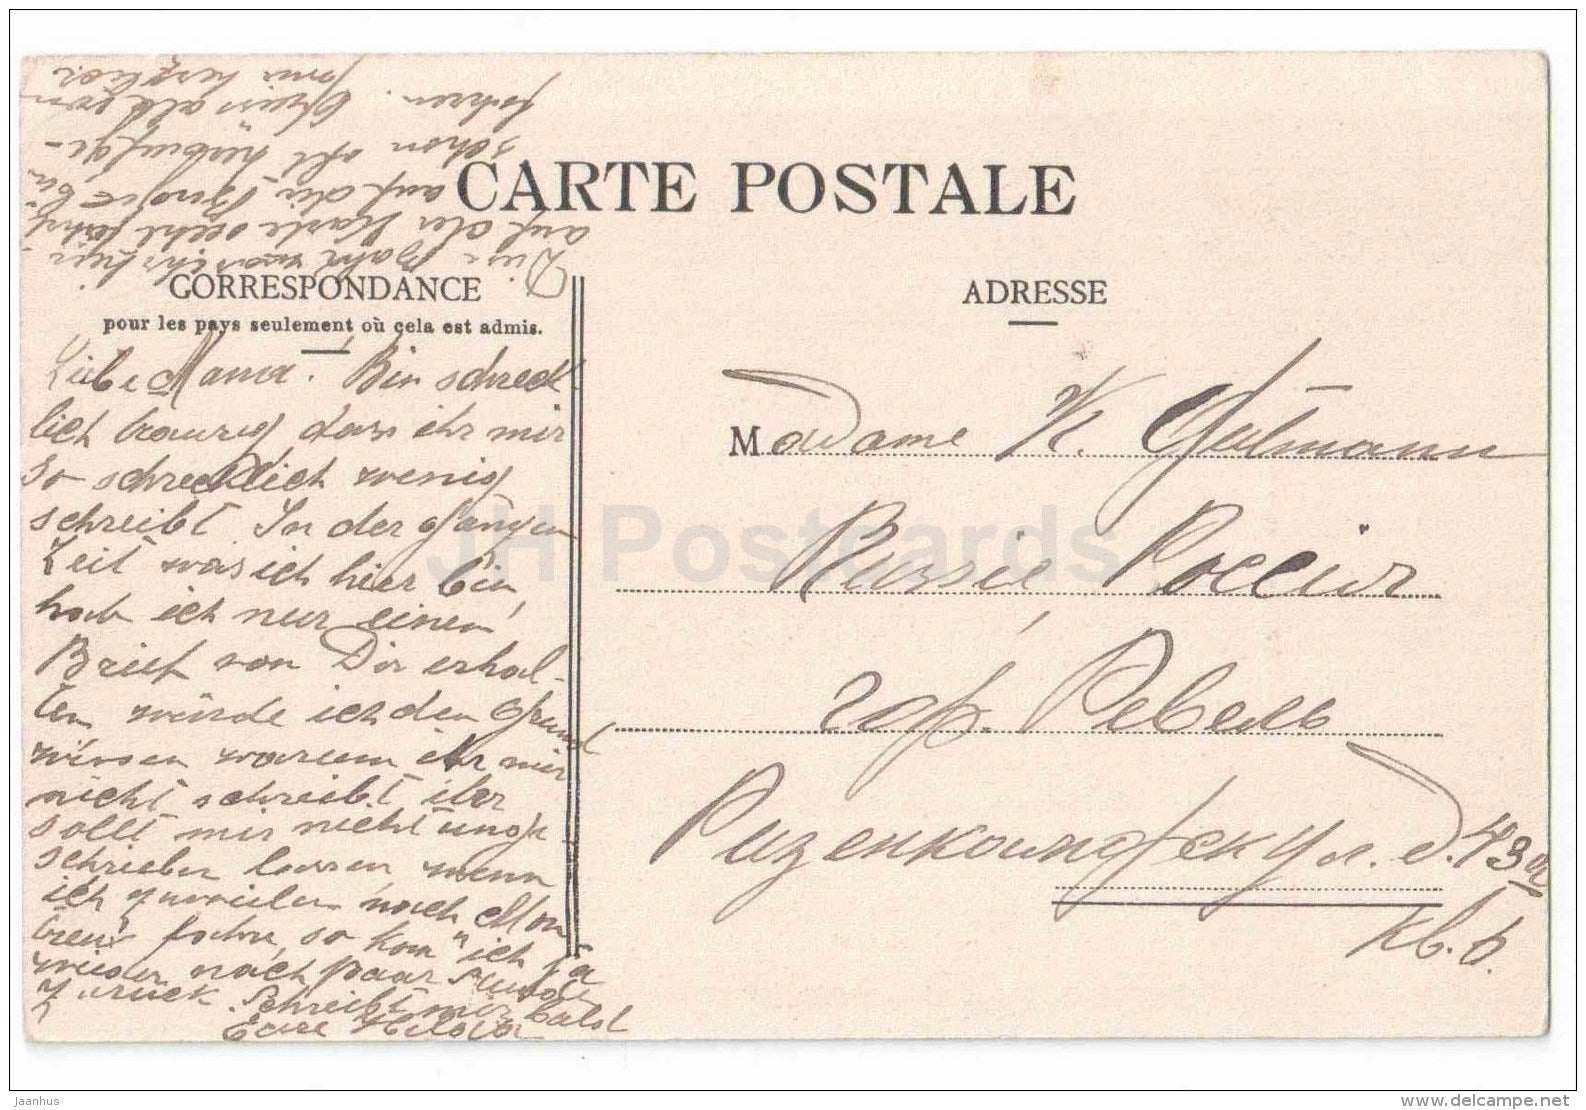 Signal - Lausanne - funicular - Switzerland - sent from Switzerland Lausanne to Tsarist Russia Estonia Reval 1900s - JH Postcards